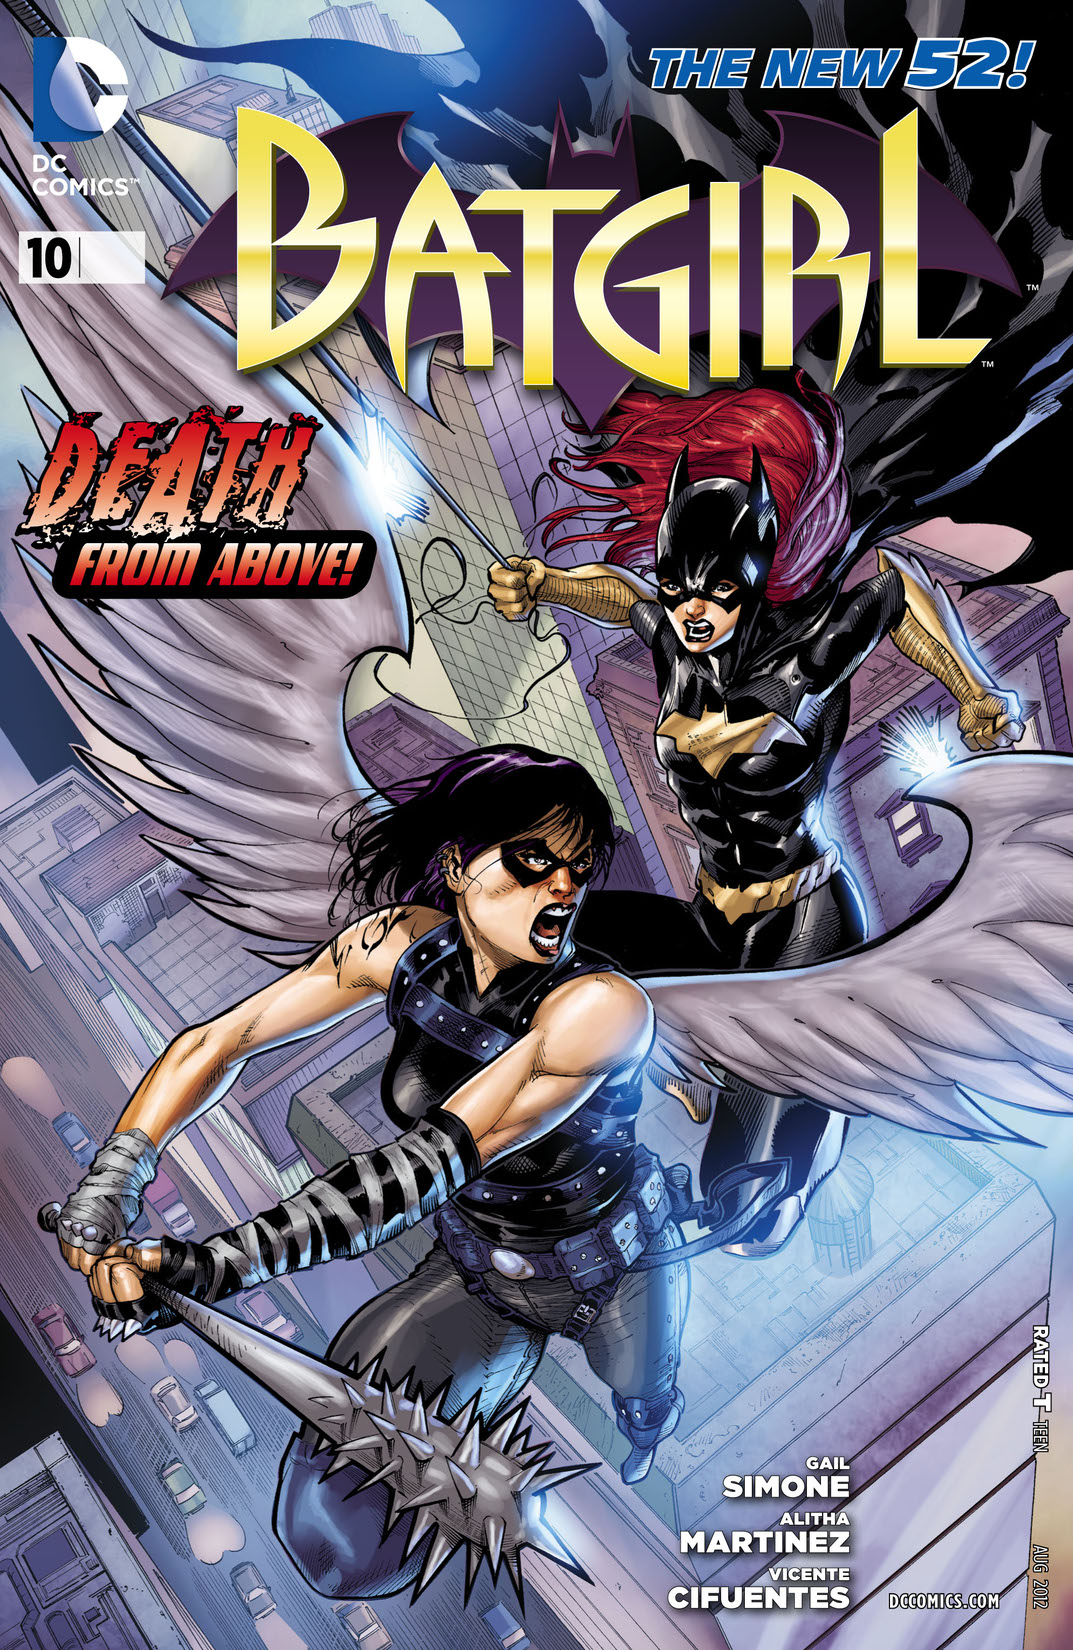 Batgirl (2011-) #10 preview images